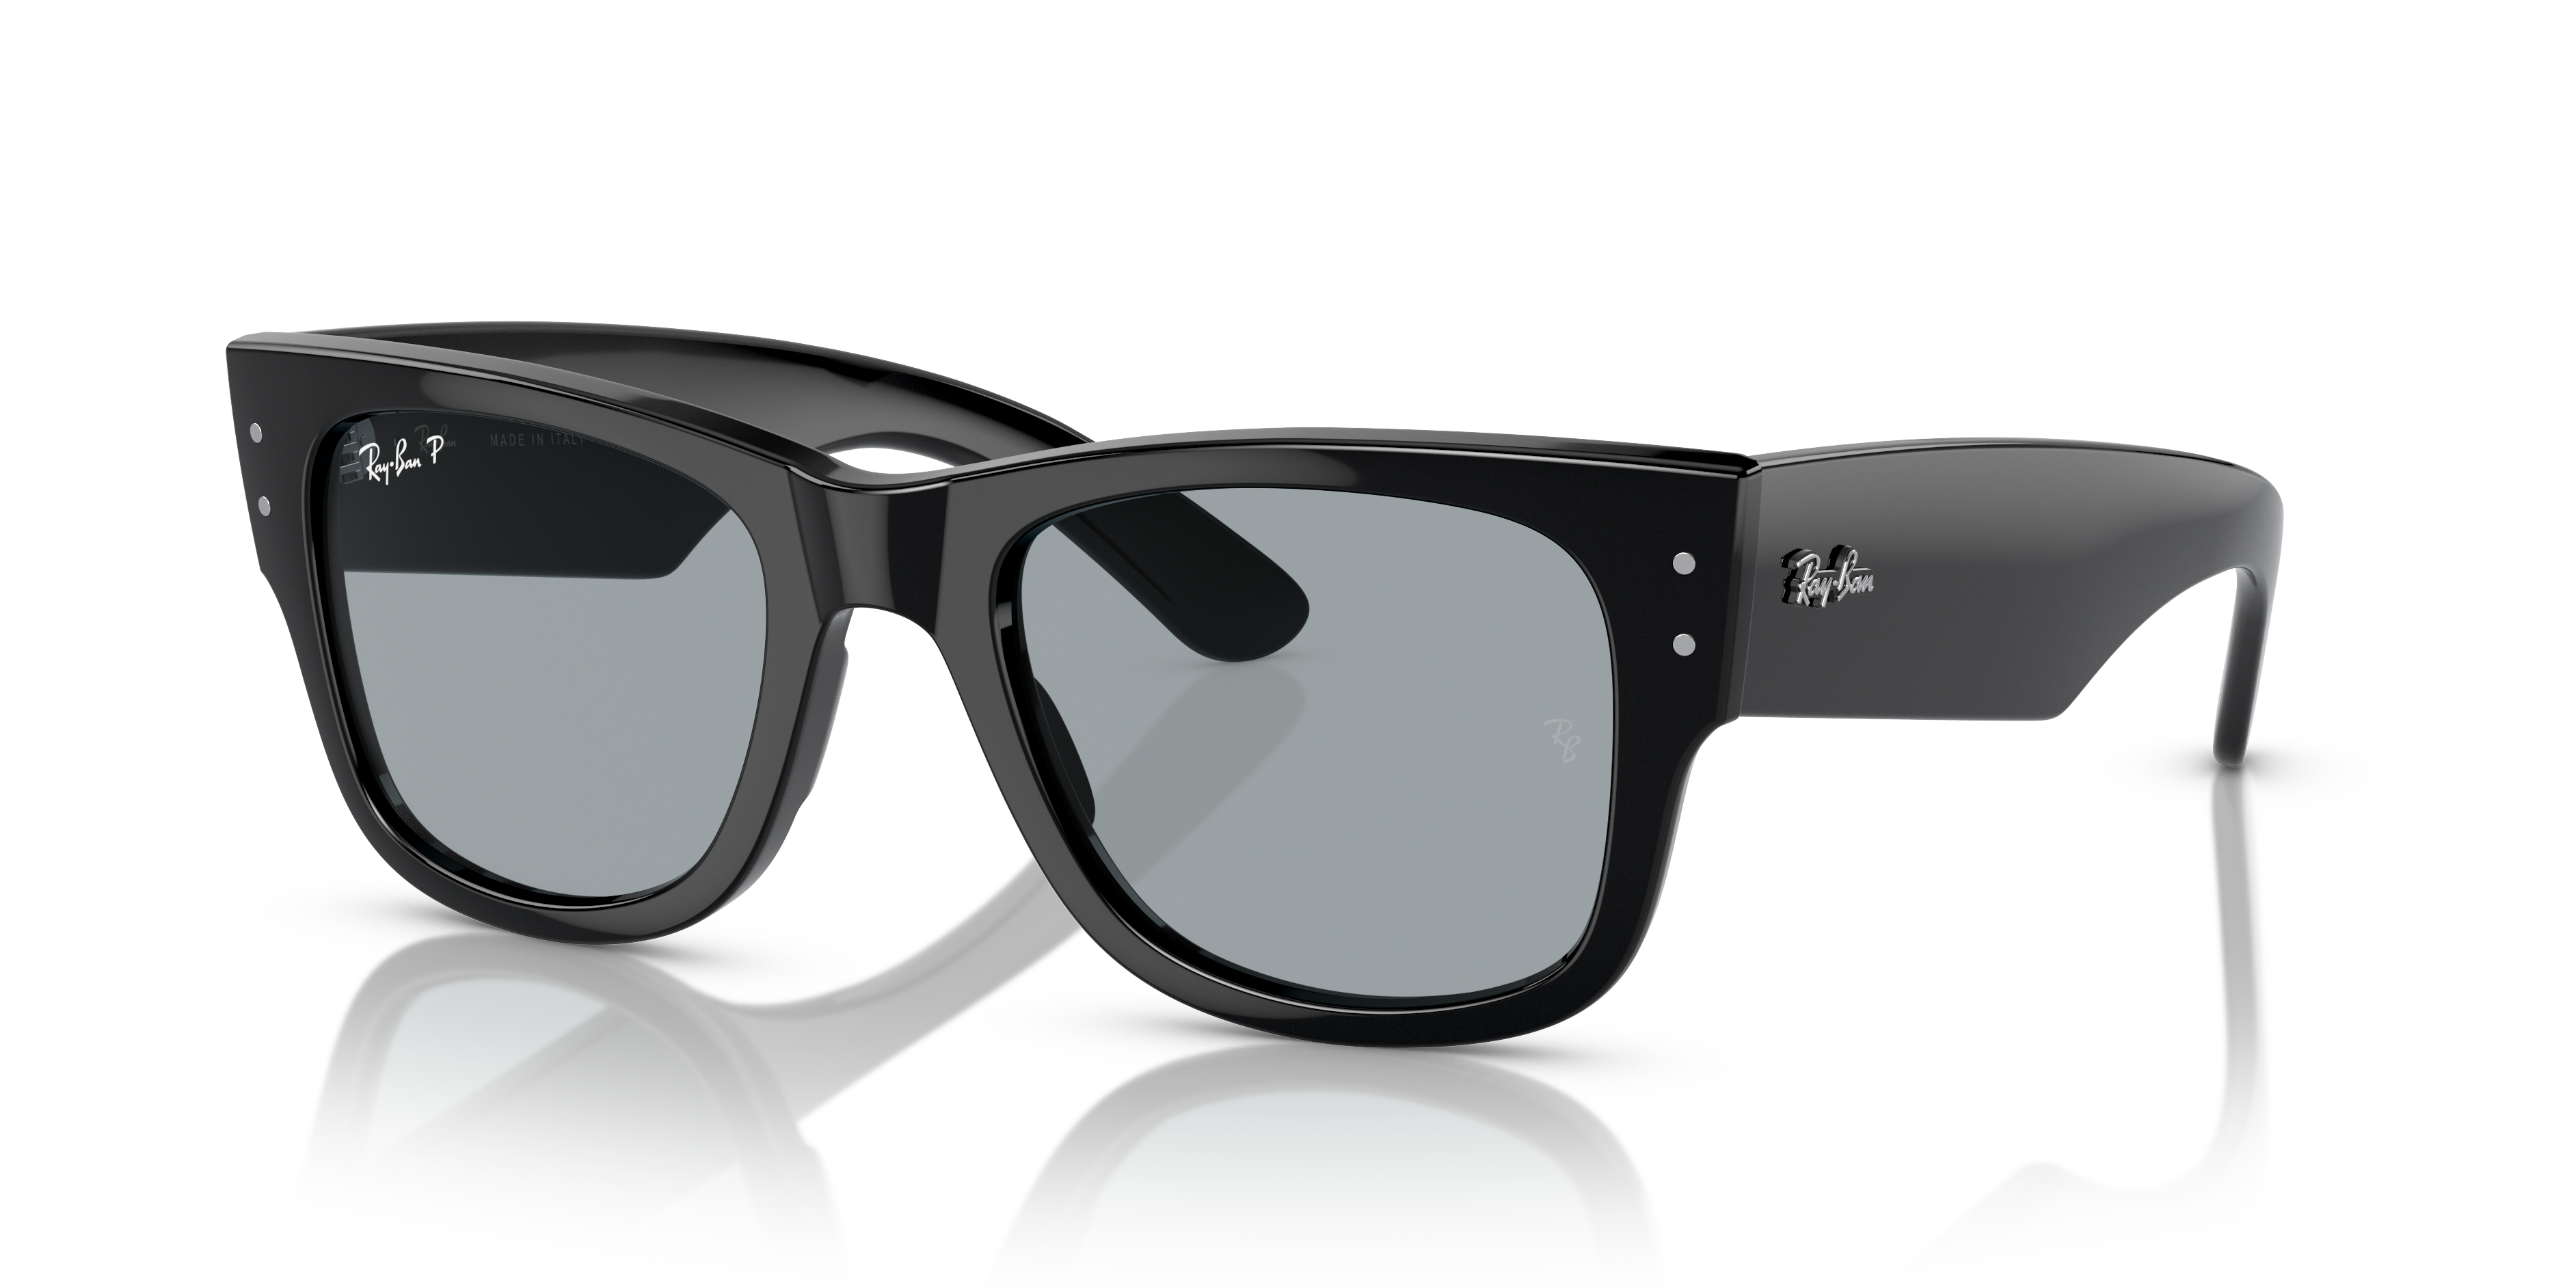 Stylish Ray-Ban Sunglasses from the Scuderia Ferrari Collection